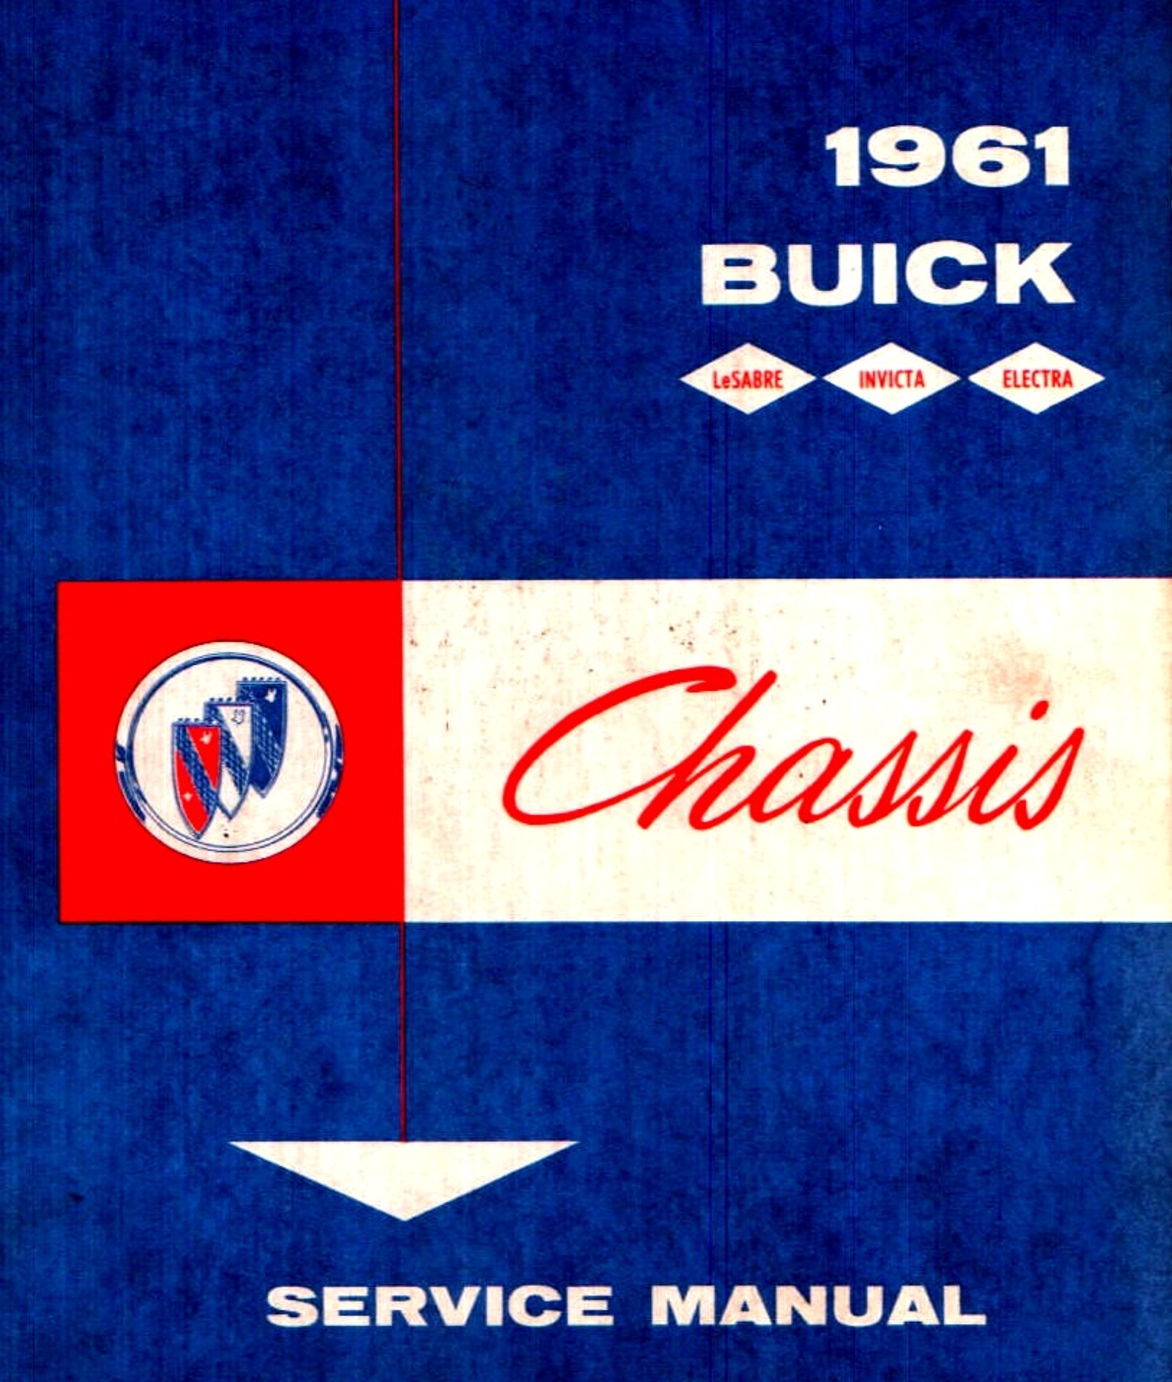 n_01 1961 Buick Shop Manual - Gen Information-001-001.jpg